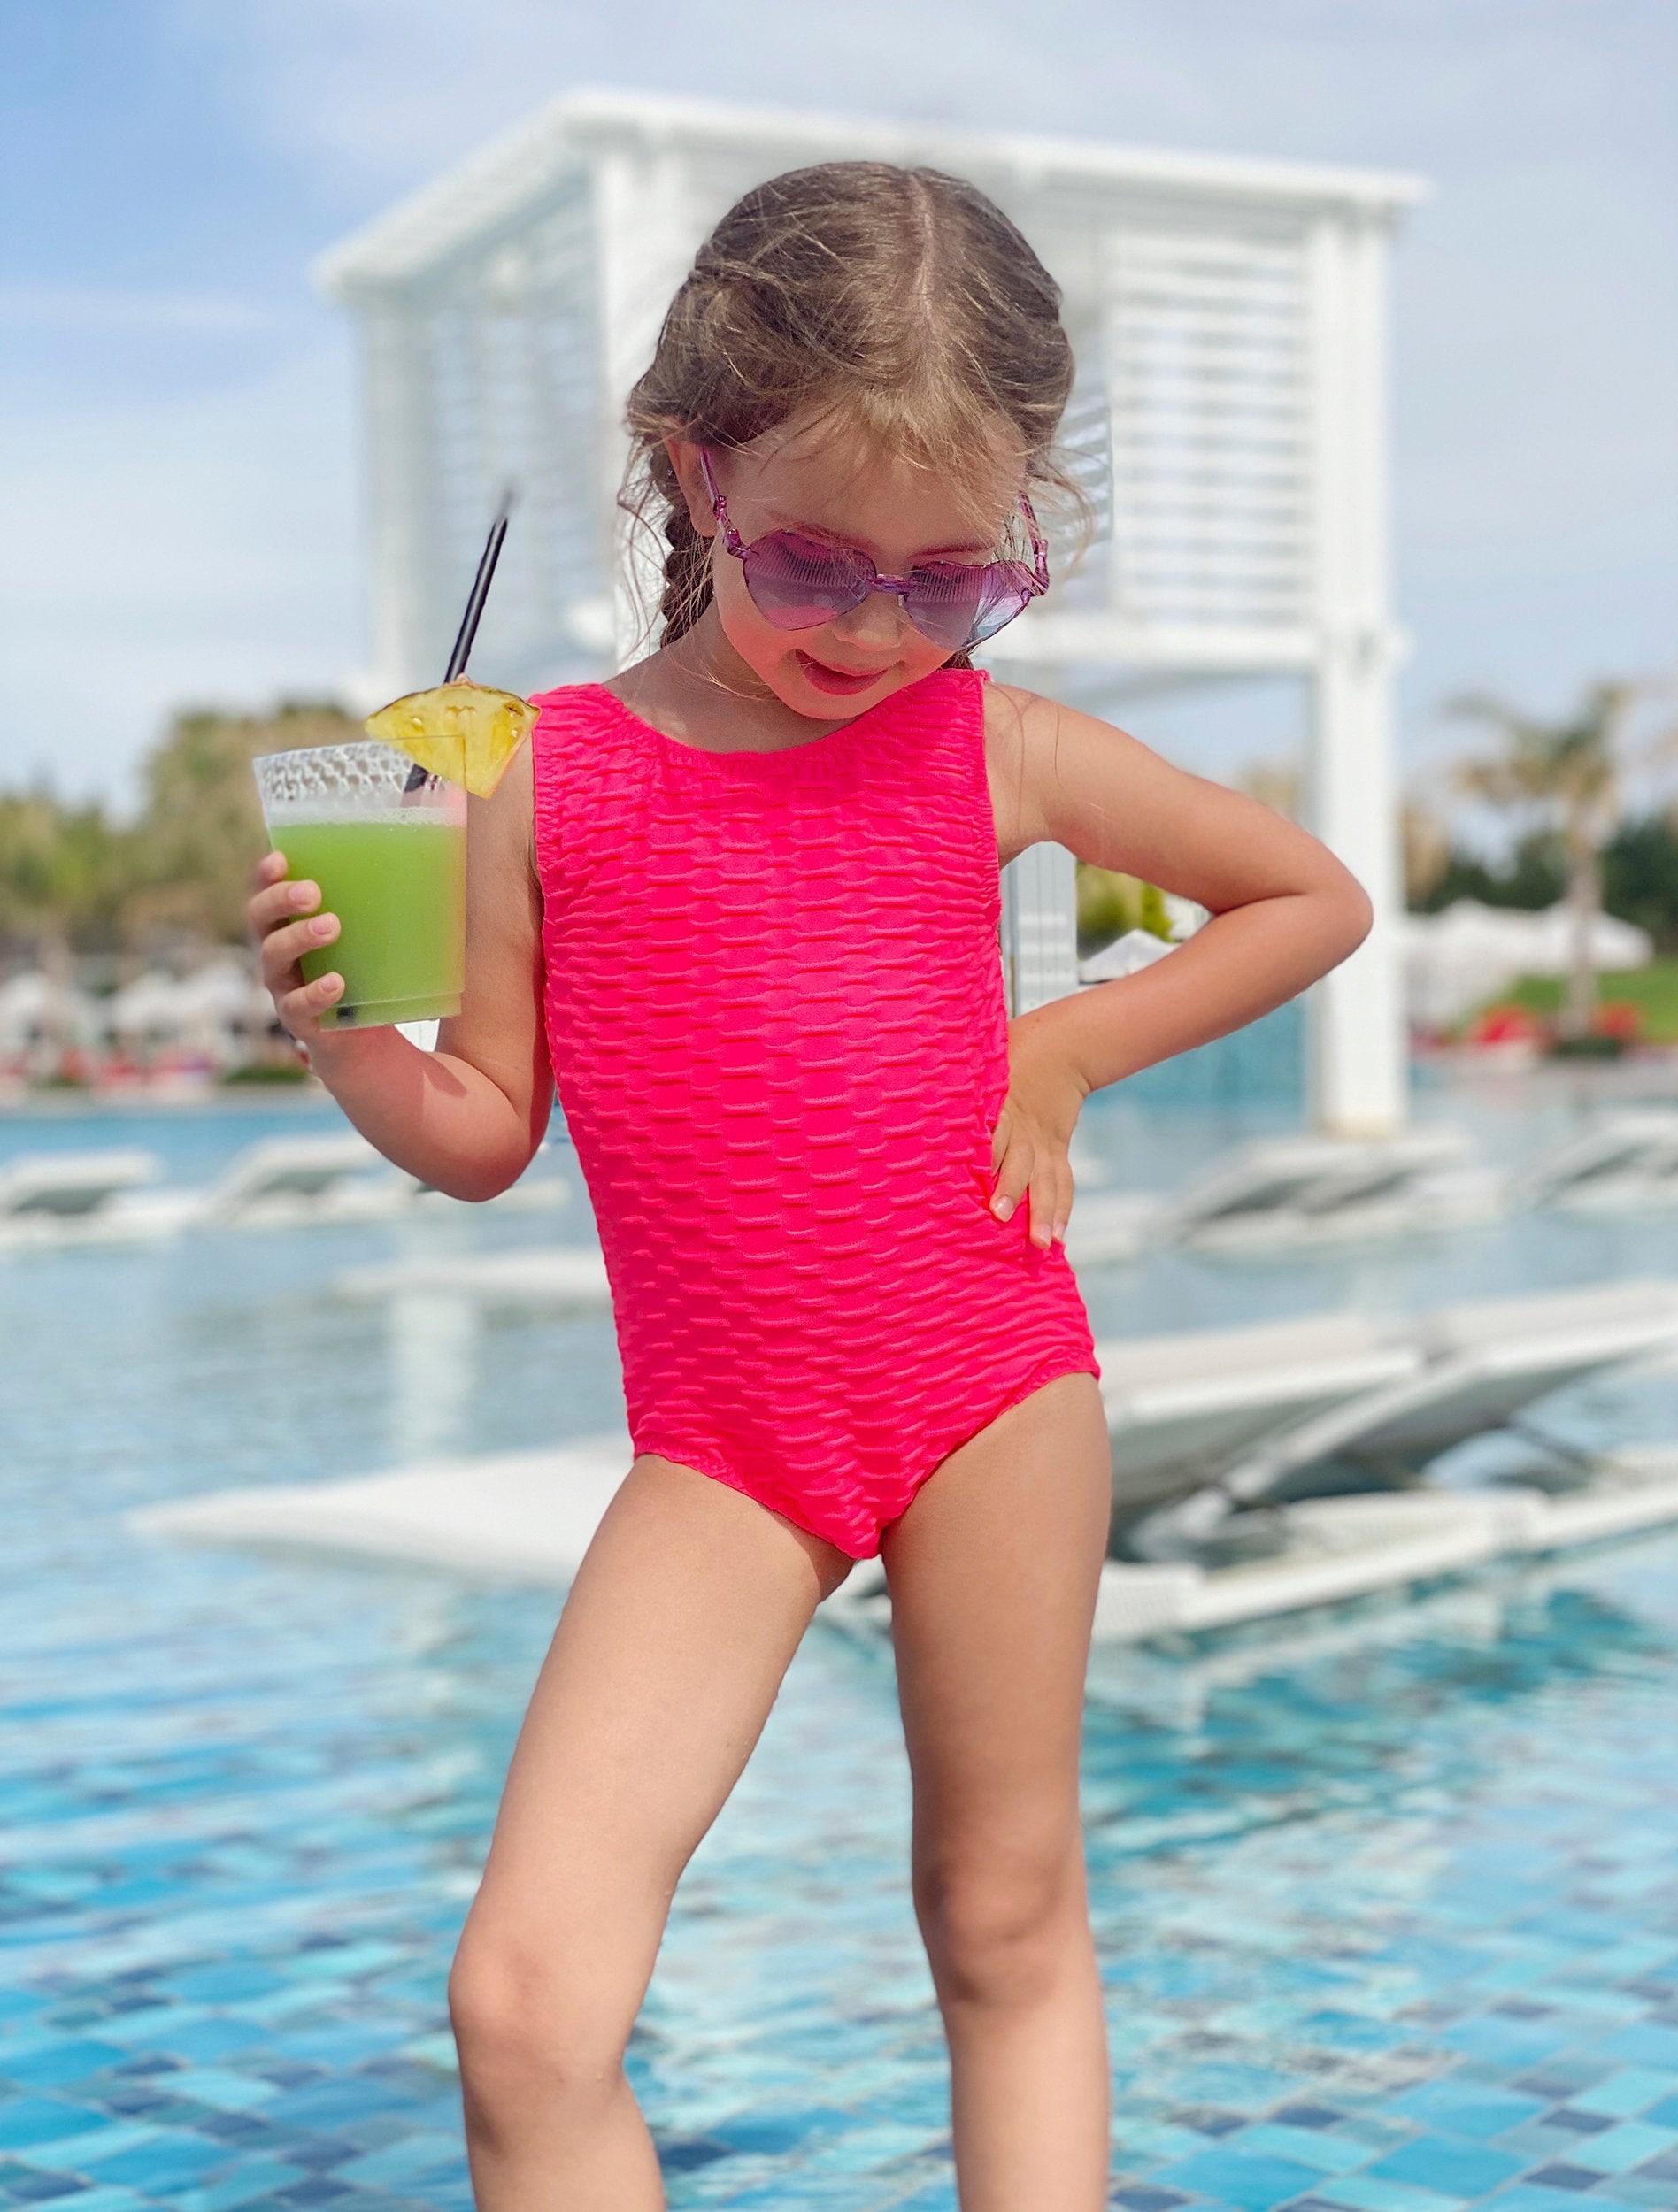 HUAANIUE Baby/Toddler Girl Swimsuit Swimwear Long Sleeve One-Piece Pink 6-12 Months 